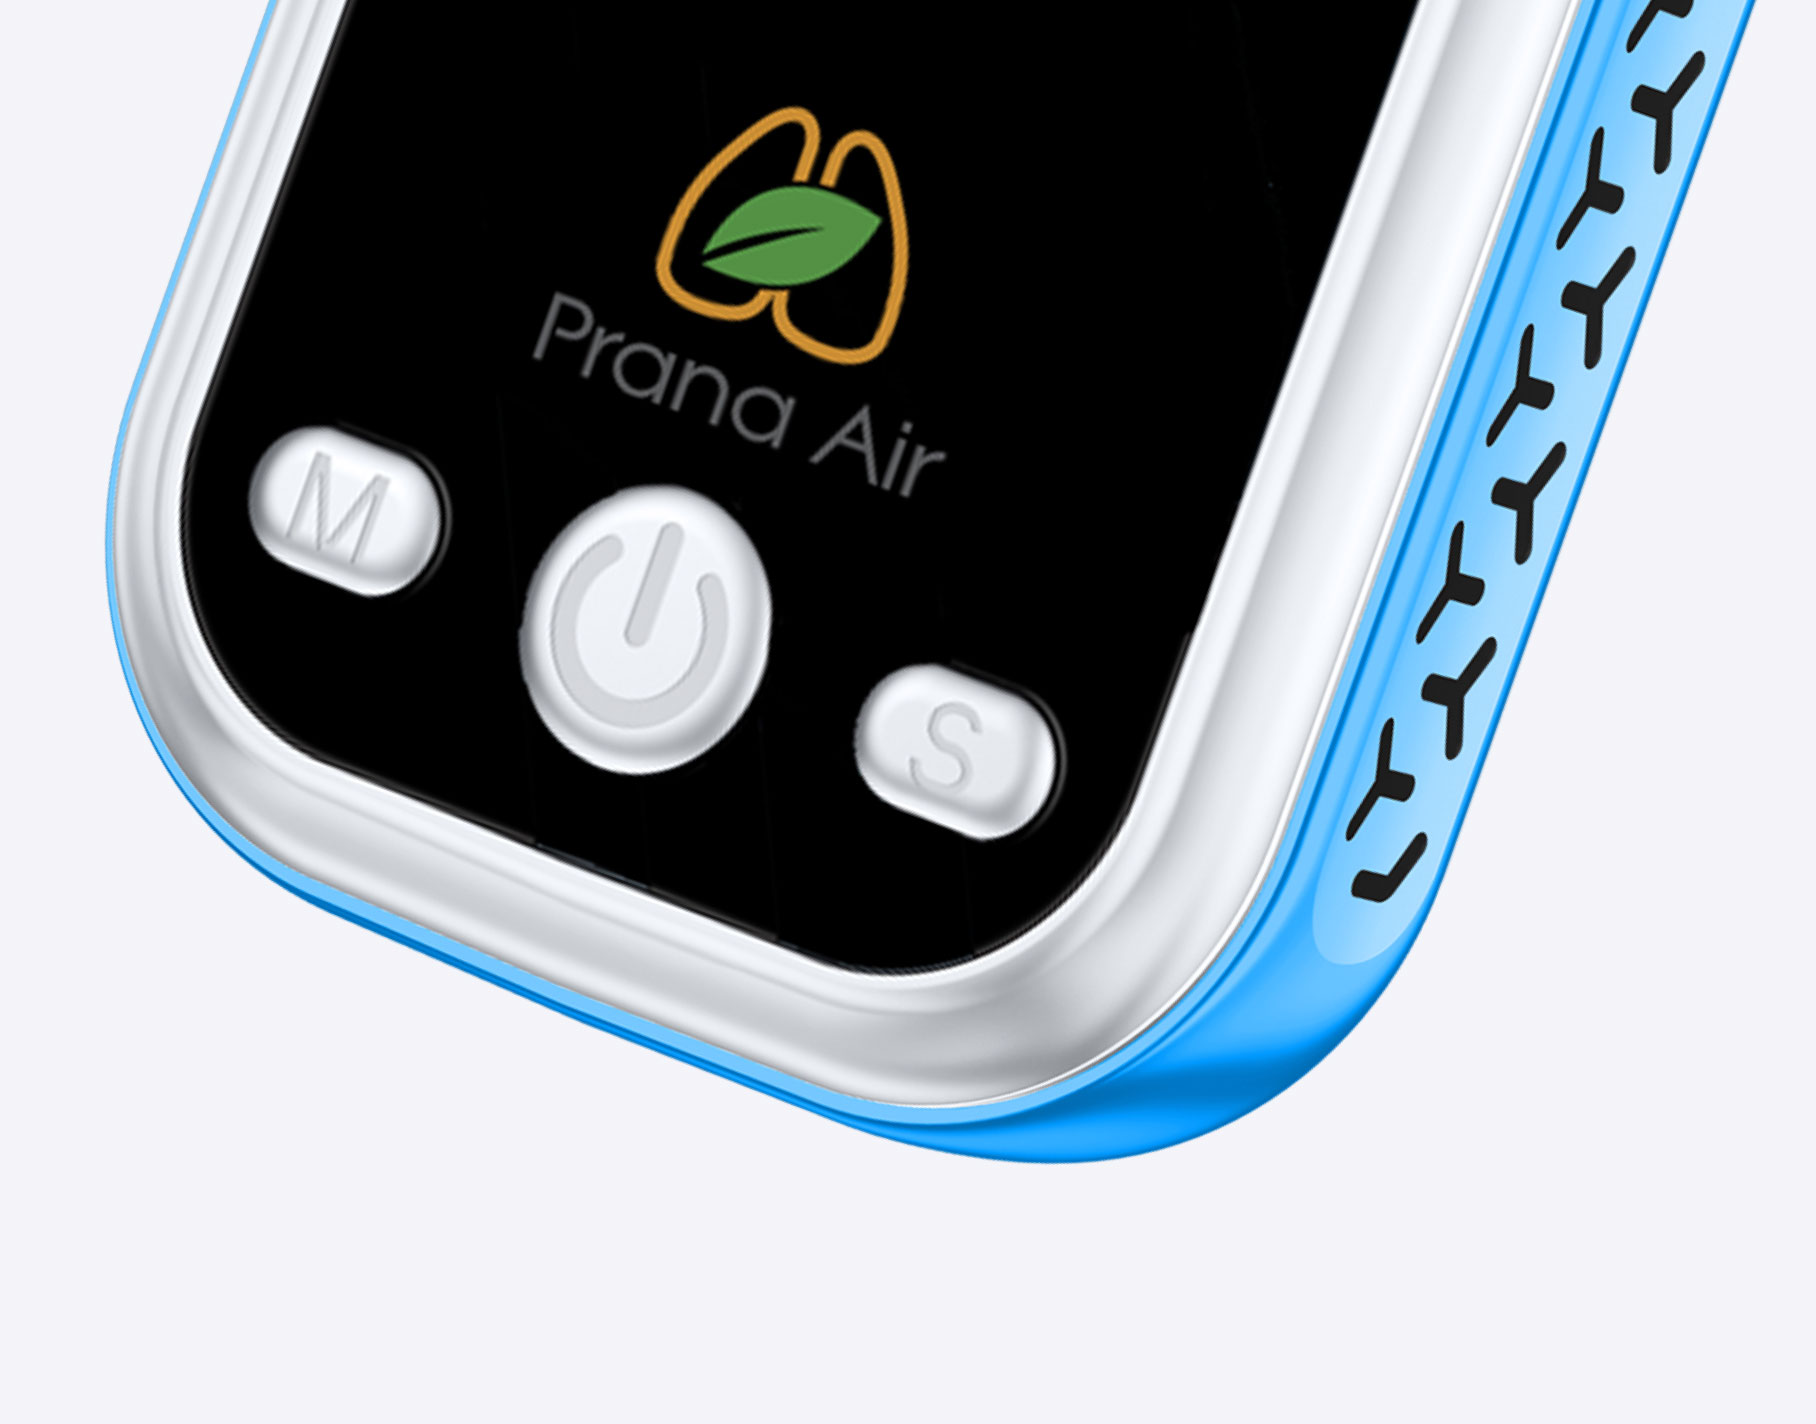 Prana Air nano co monitor button functions